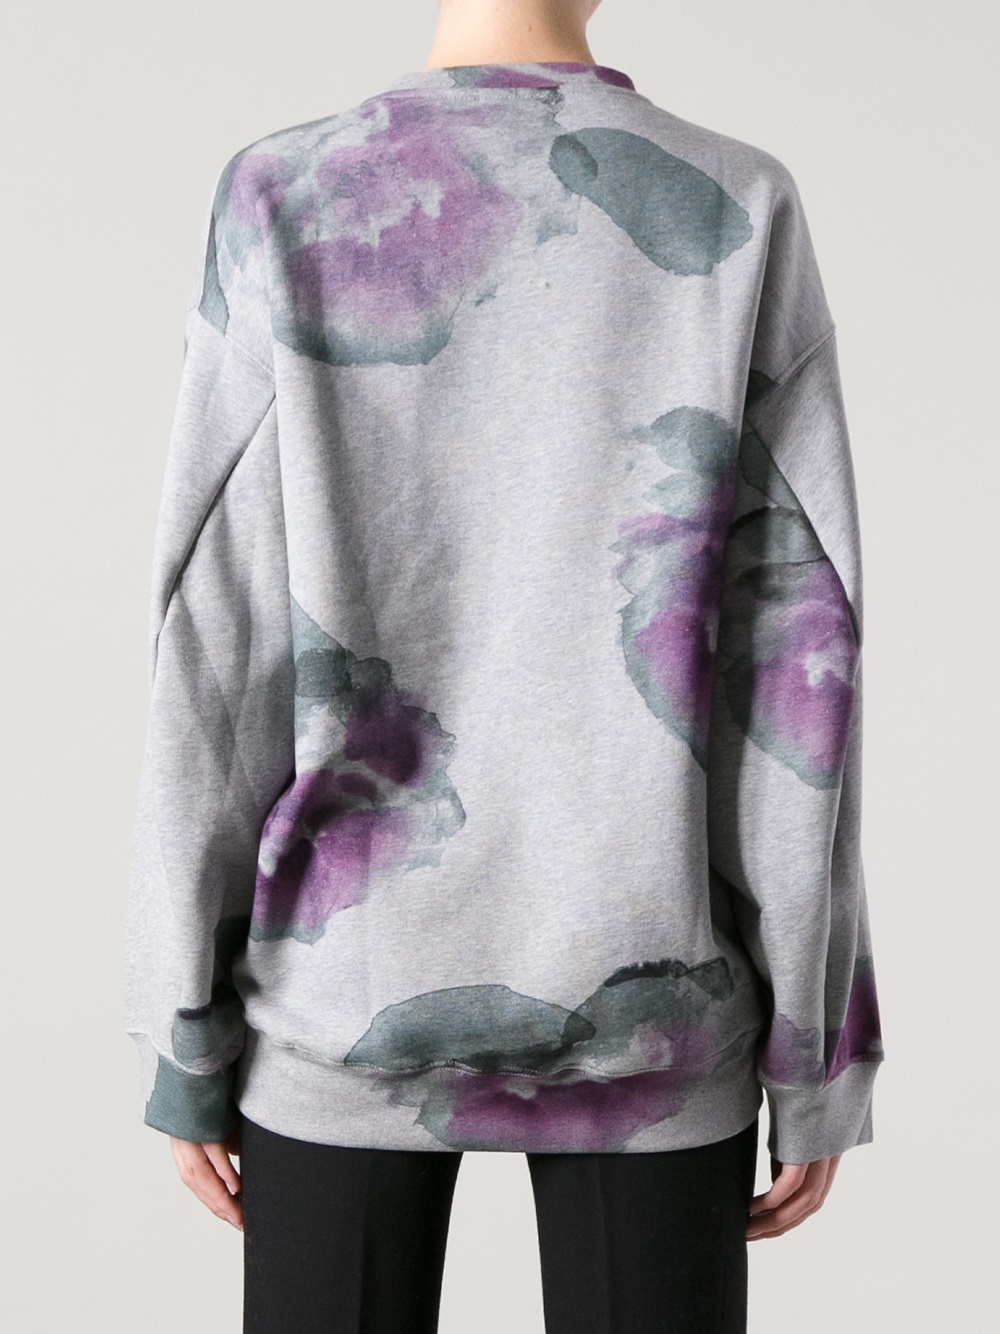 Acne Studios Beta Print Oversized Sweatshirt in Grey (Gray) - Lyst